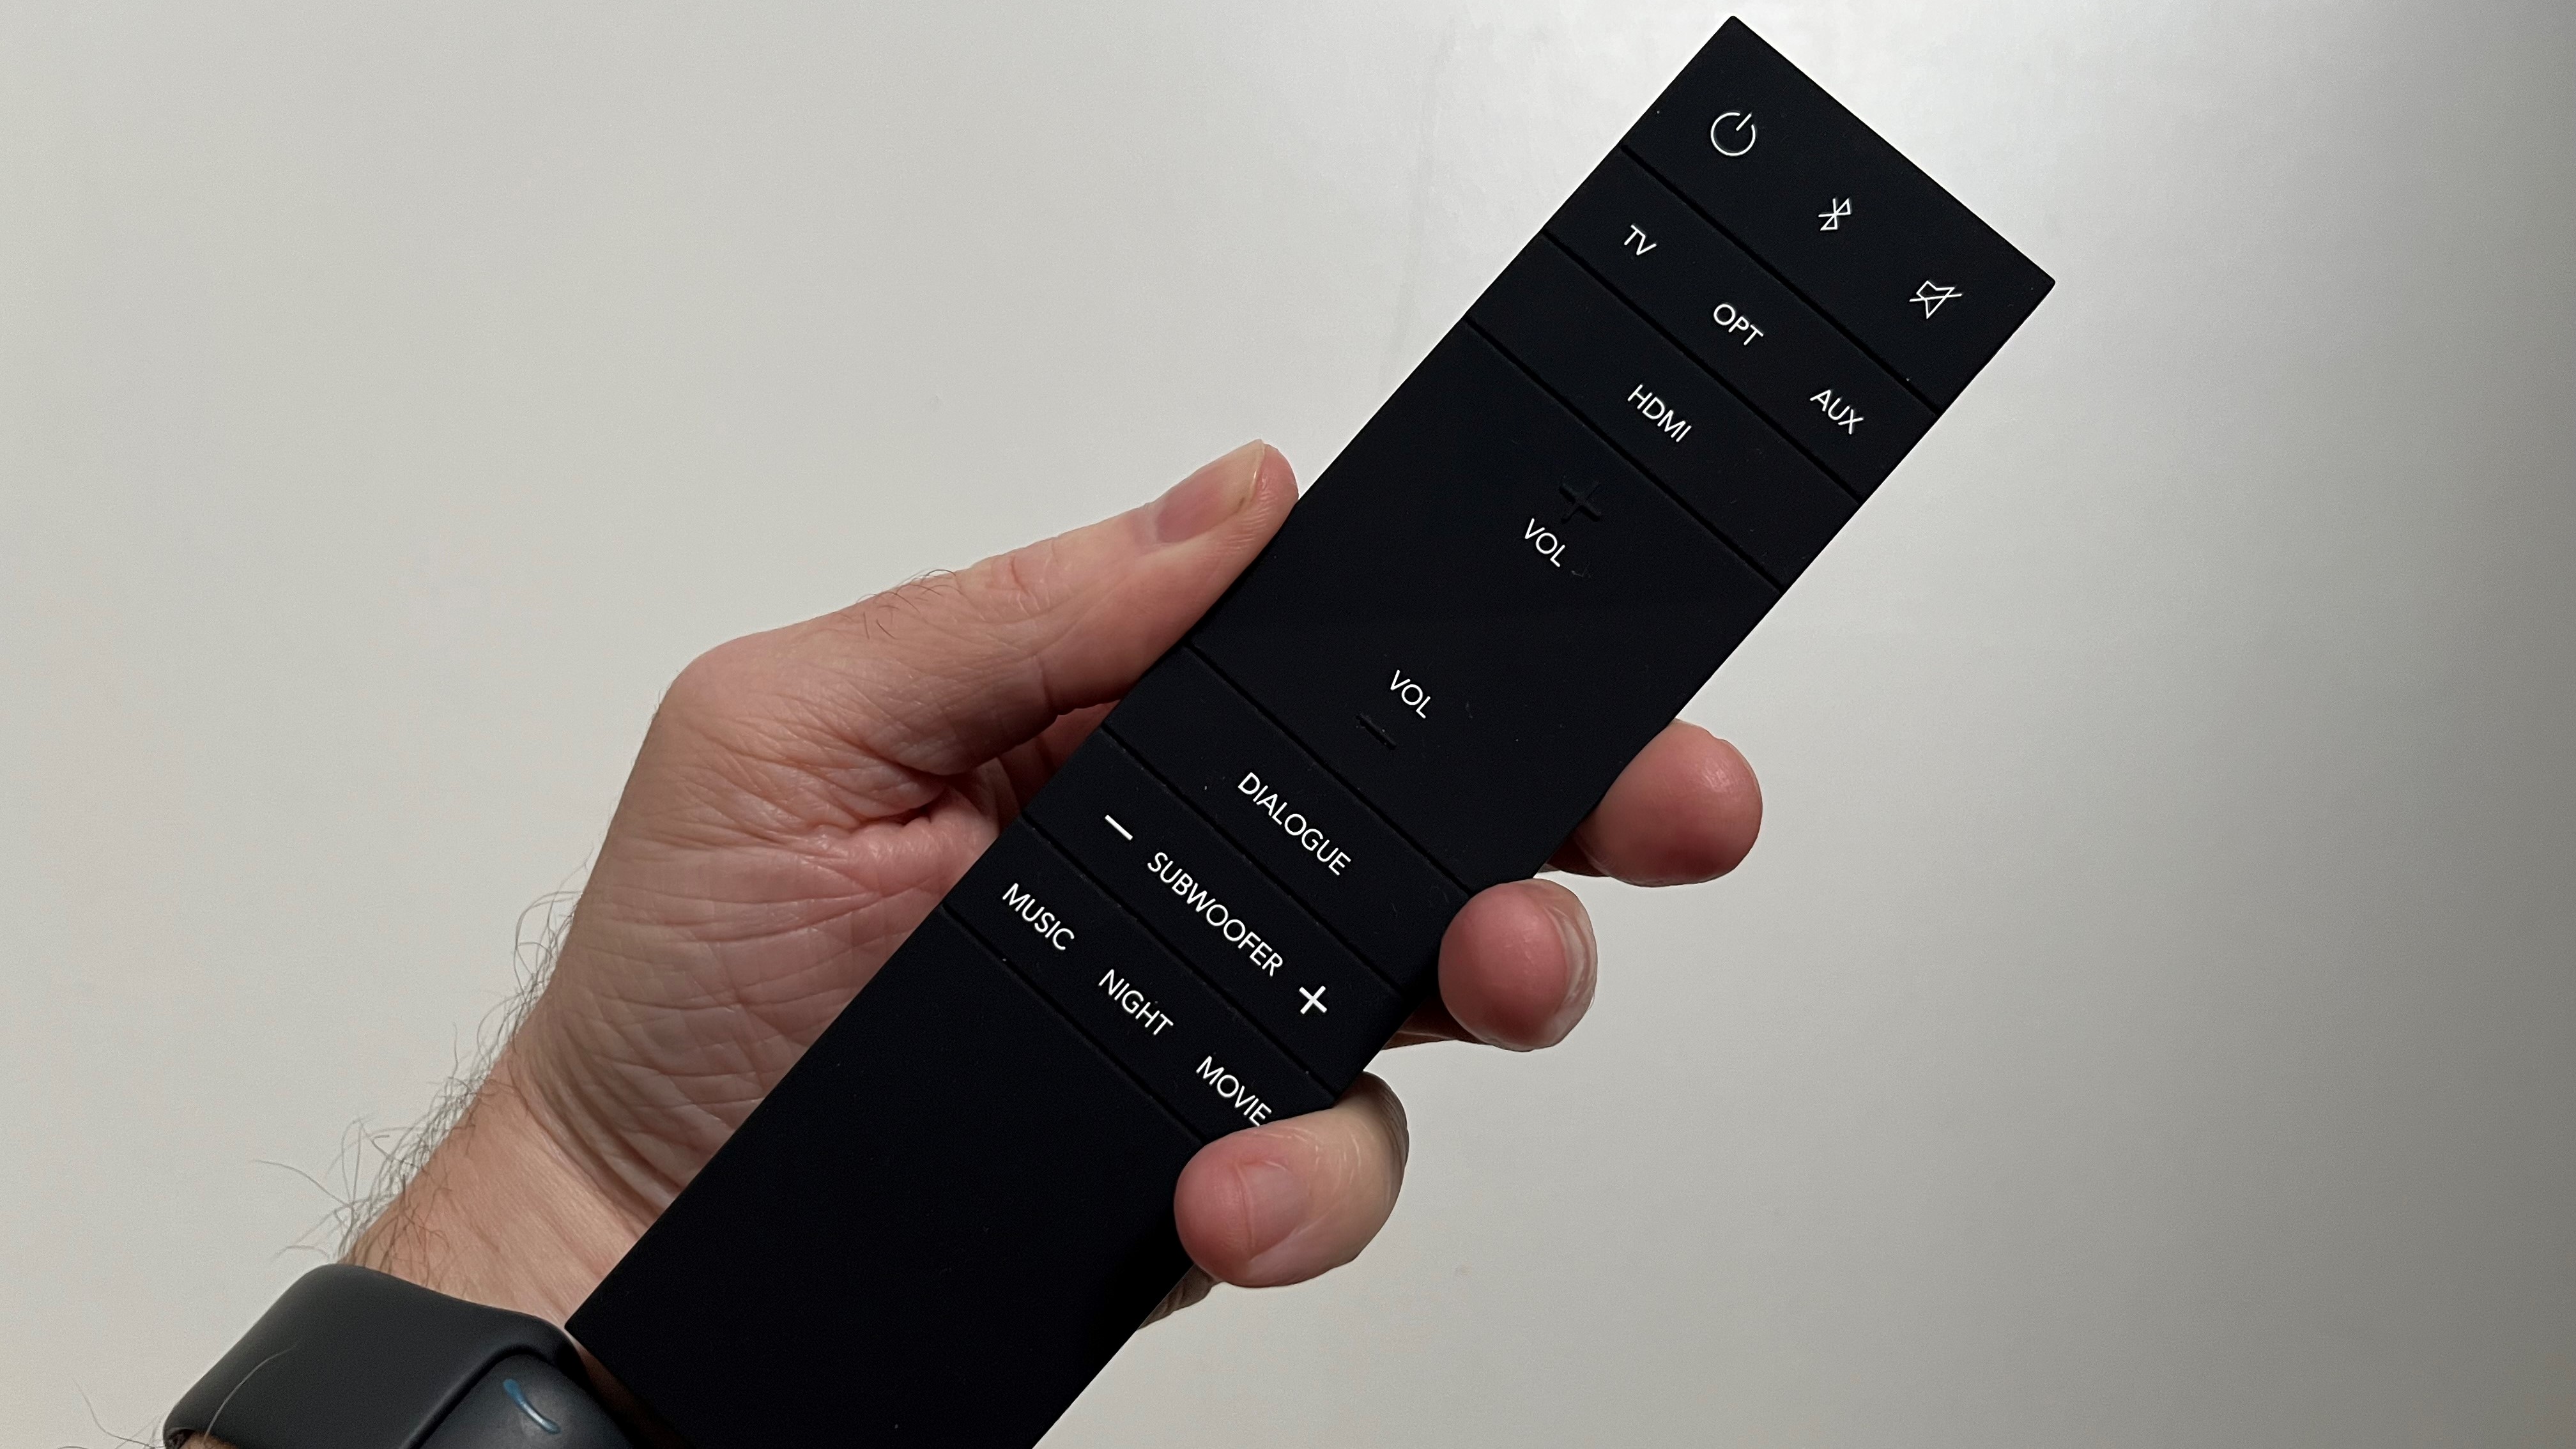 Definitive Technology Studio 3D Mini soundbar remote control held in hand against white background